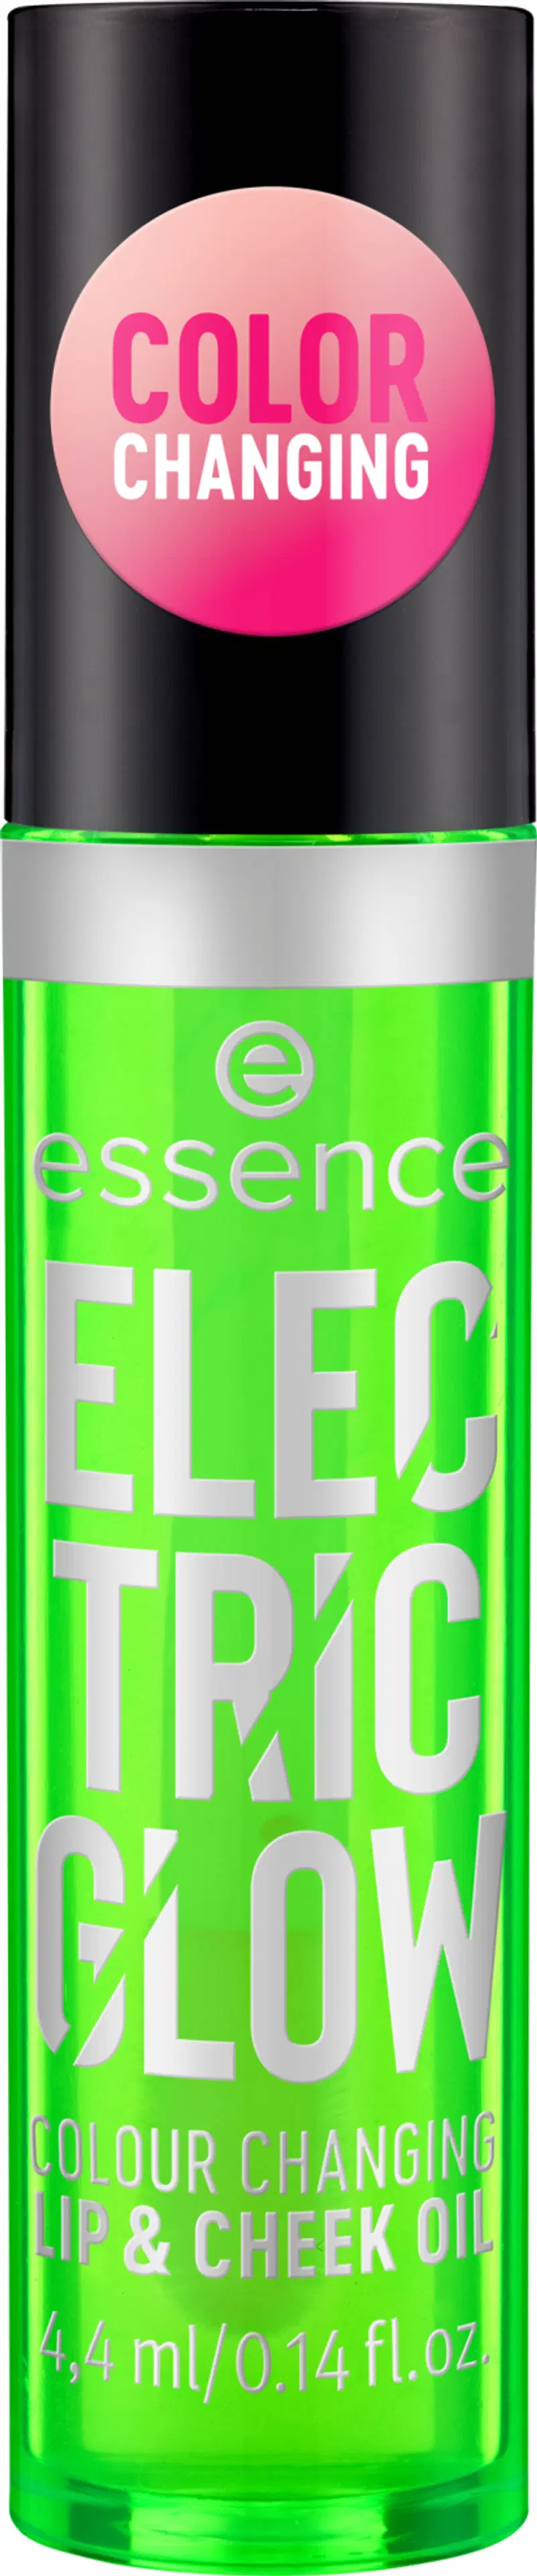 essence ELECTRIC GLOW COLOUR CHANGING LIP & CHEEK OIL väriä vaihtava huuli- ja poskiöljy 4,4 ml